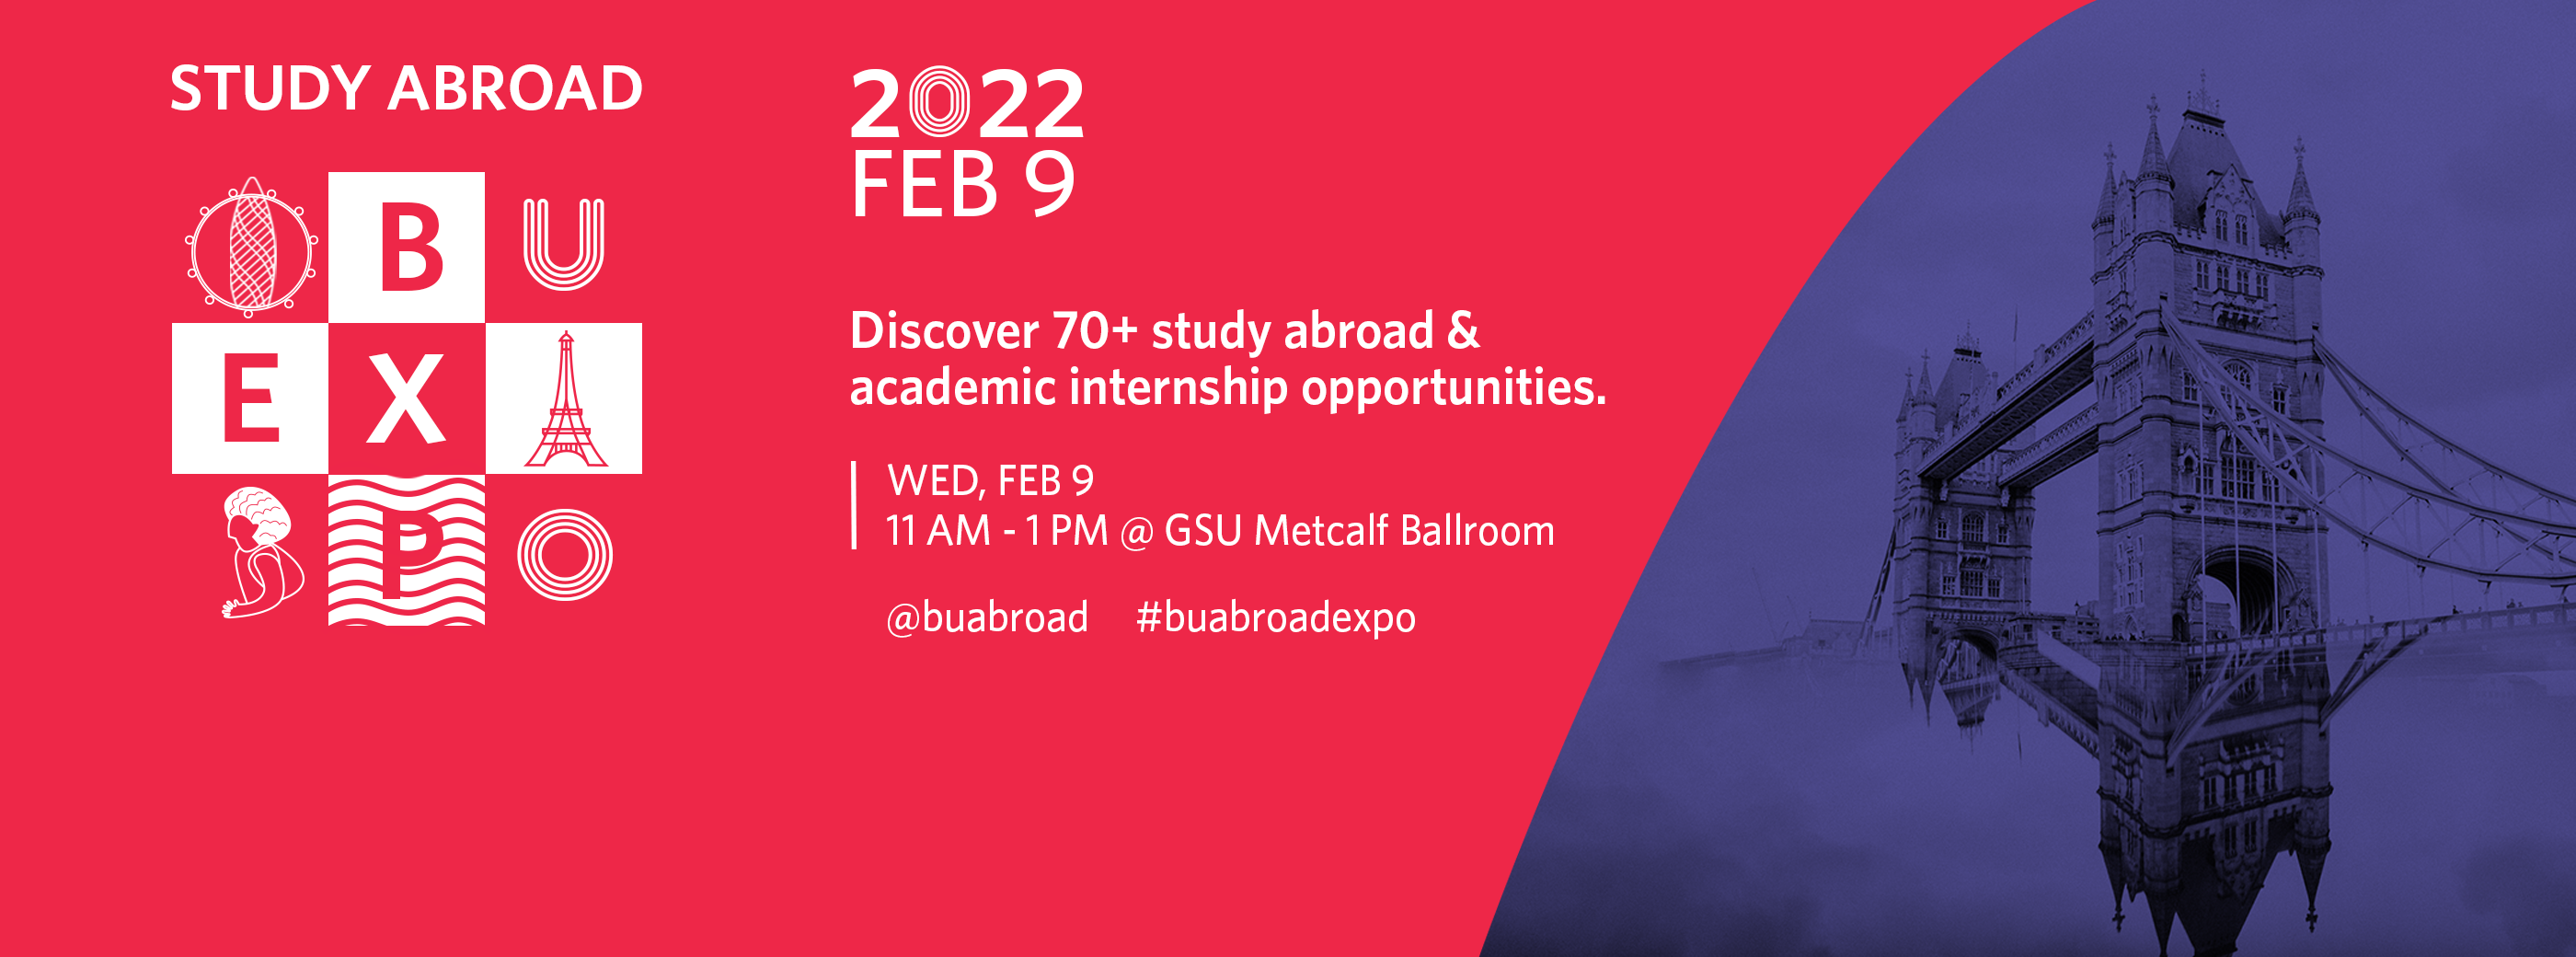 Gsu Calendar Spring 2022 Study Abroad Expo | Study Abroad